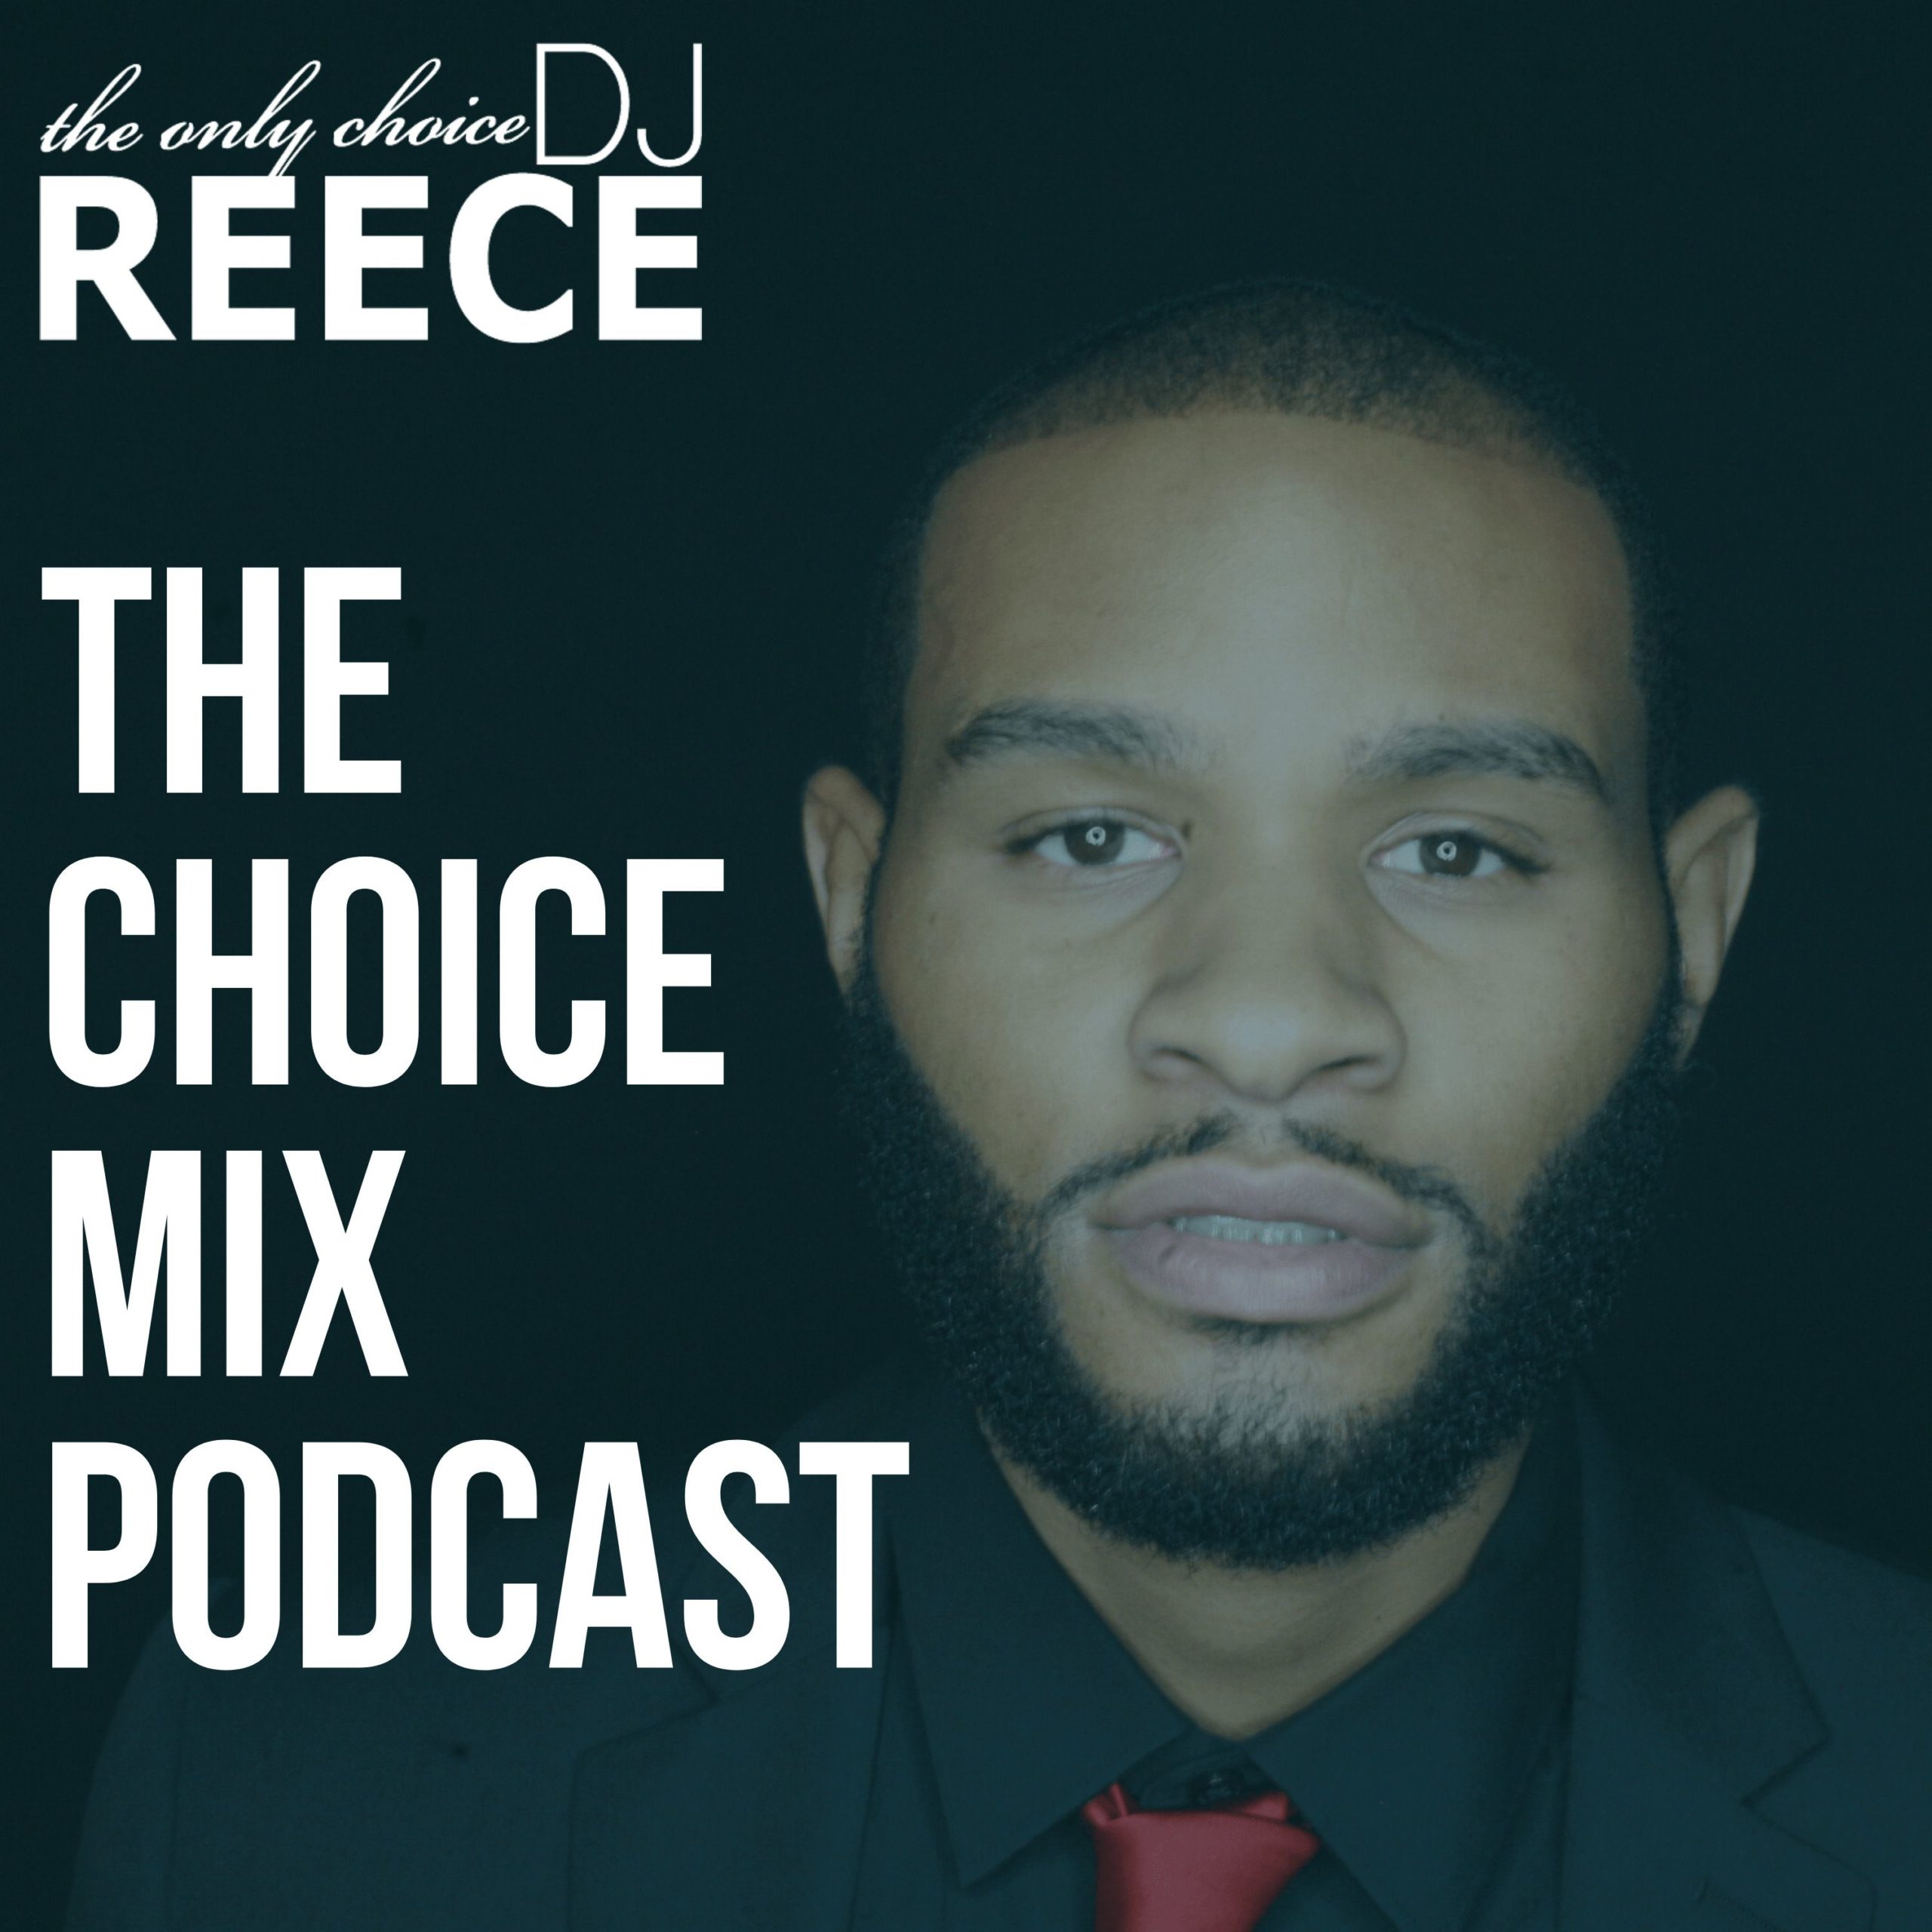 DJ Reece Podcast Intro